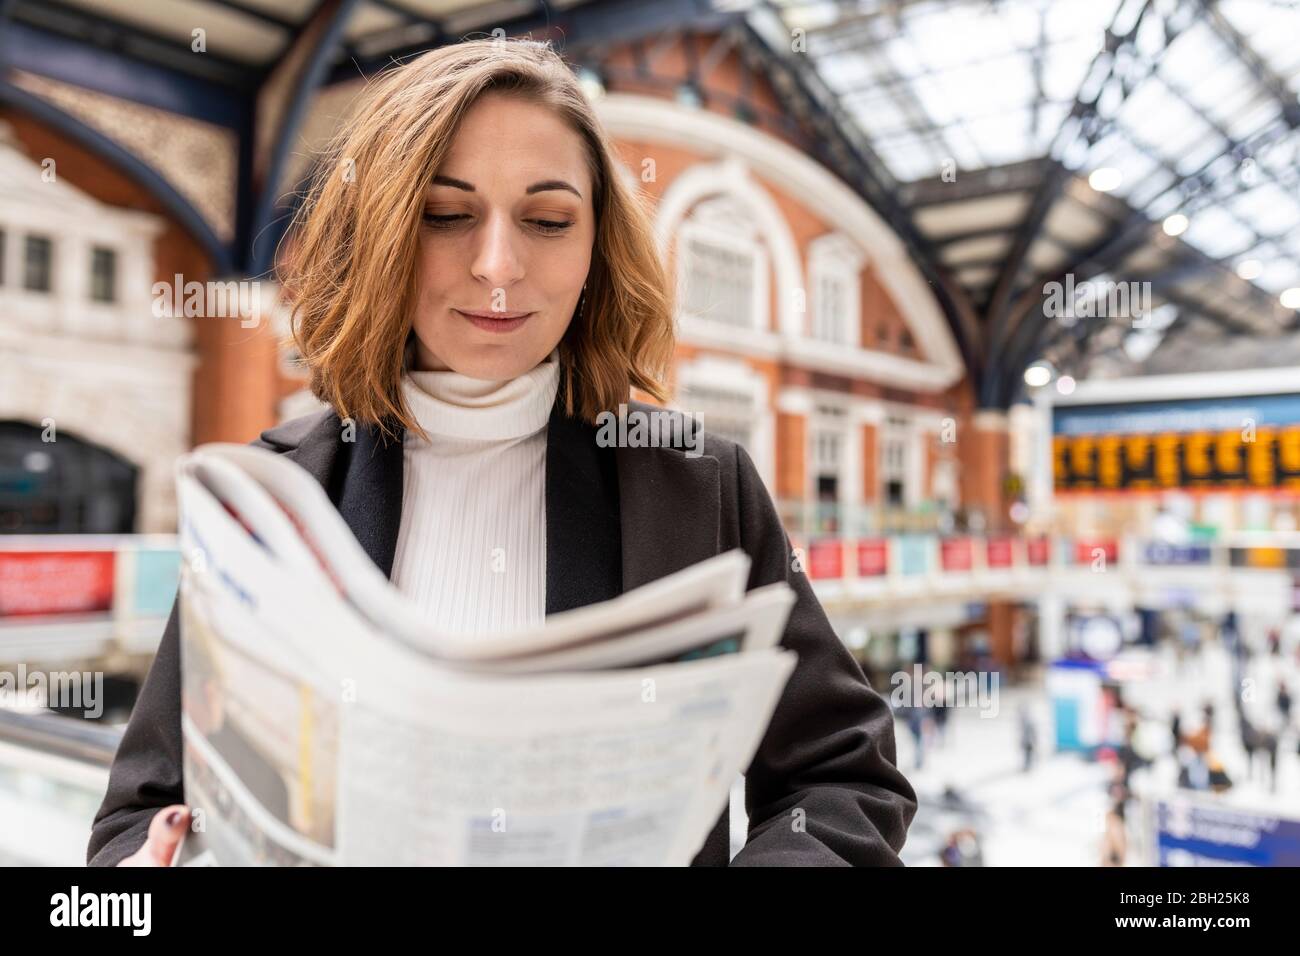 Woman at train station reading a newspaper, London, UK Stock Photo